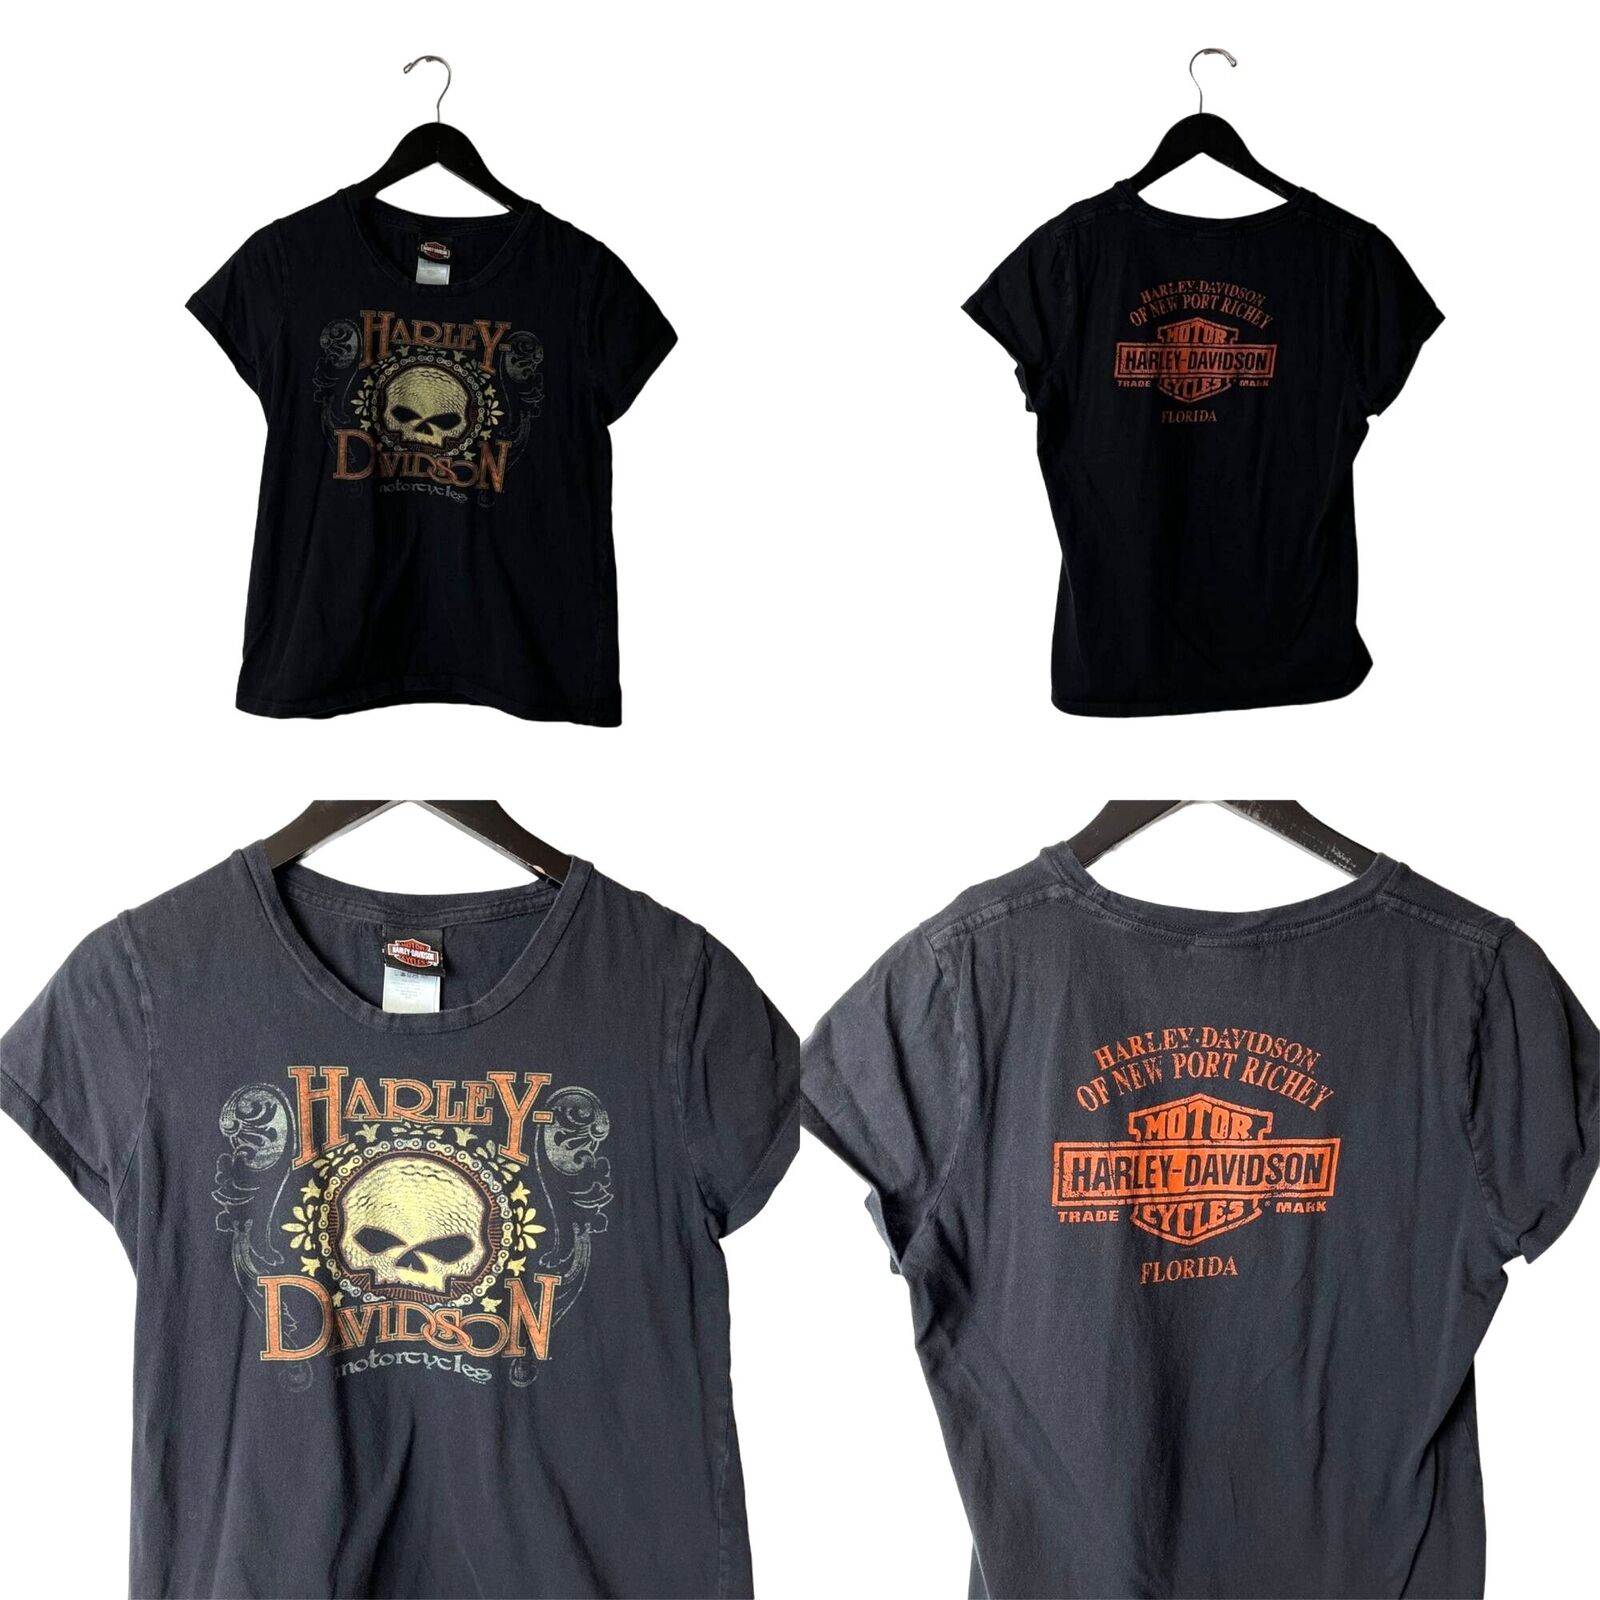 2014 Harley Davidson Fliorida Motorcycles T Shirt Womens Black Large L USA Solid